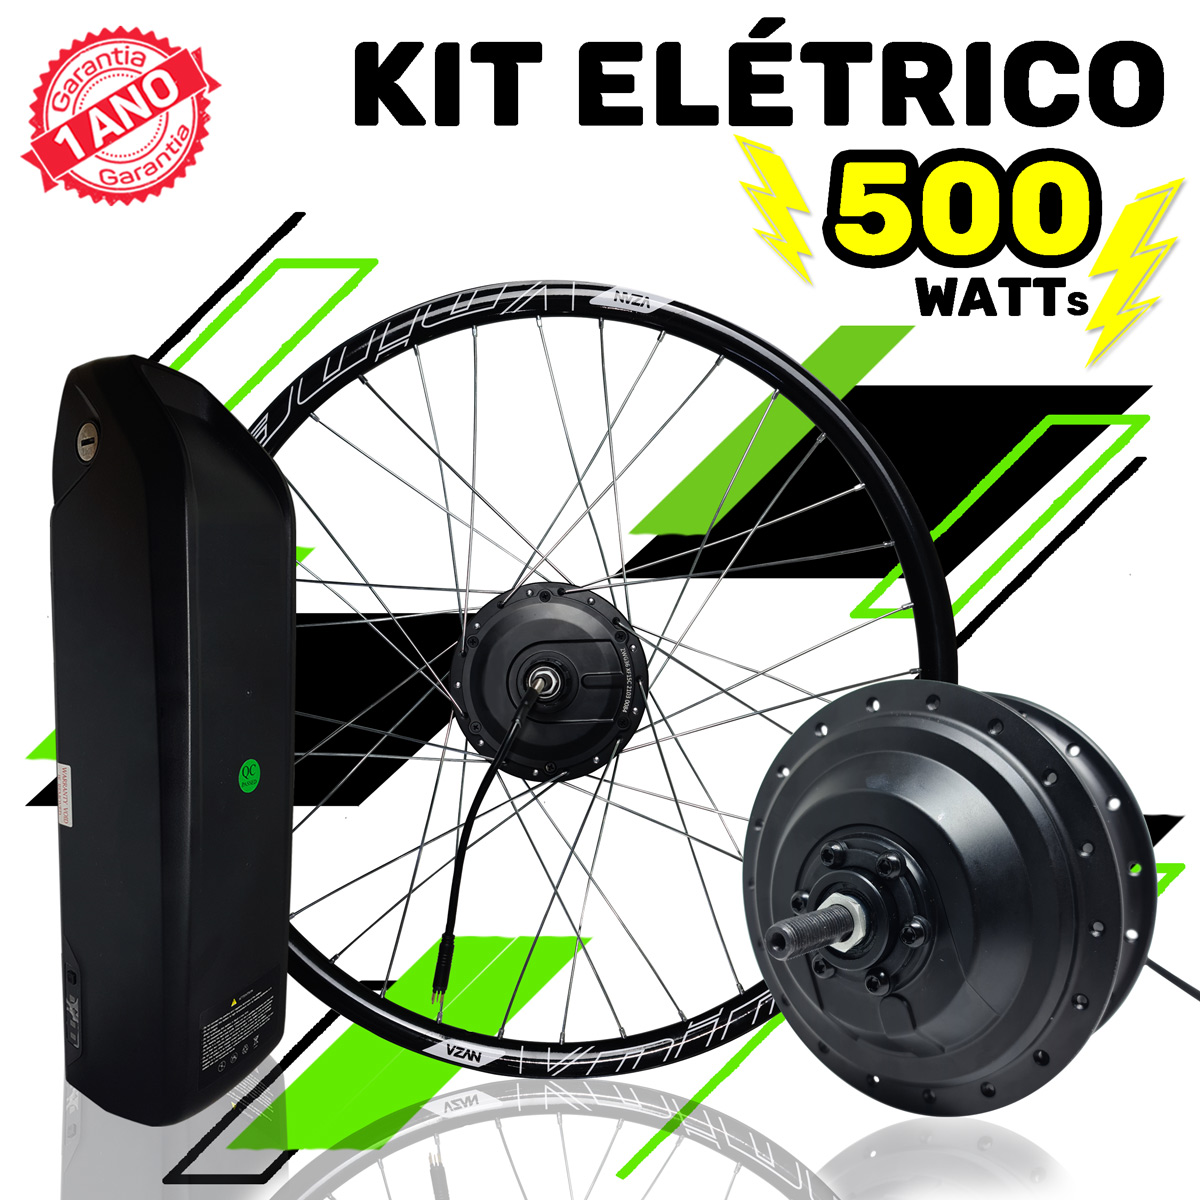 Kit Elétrico para Bicicleta - TecBike - Bateria Preta - 500 Watts 36V - Aro 27,5